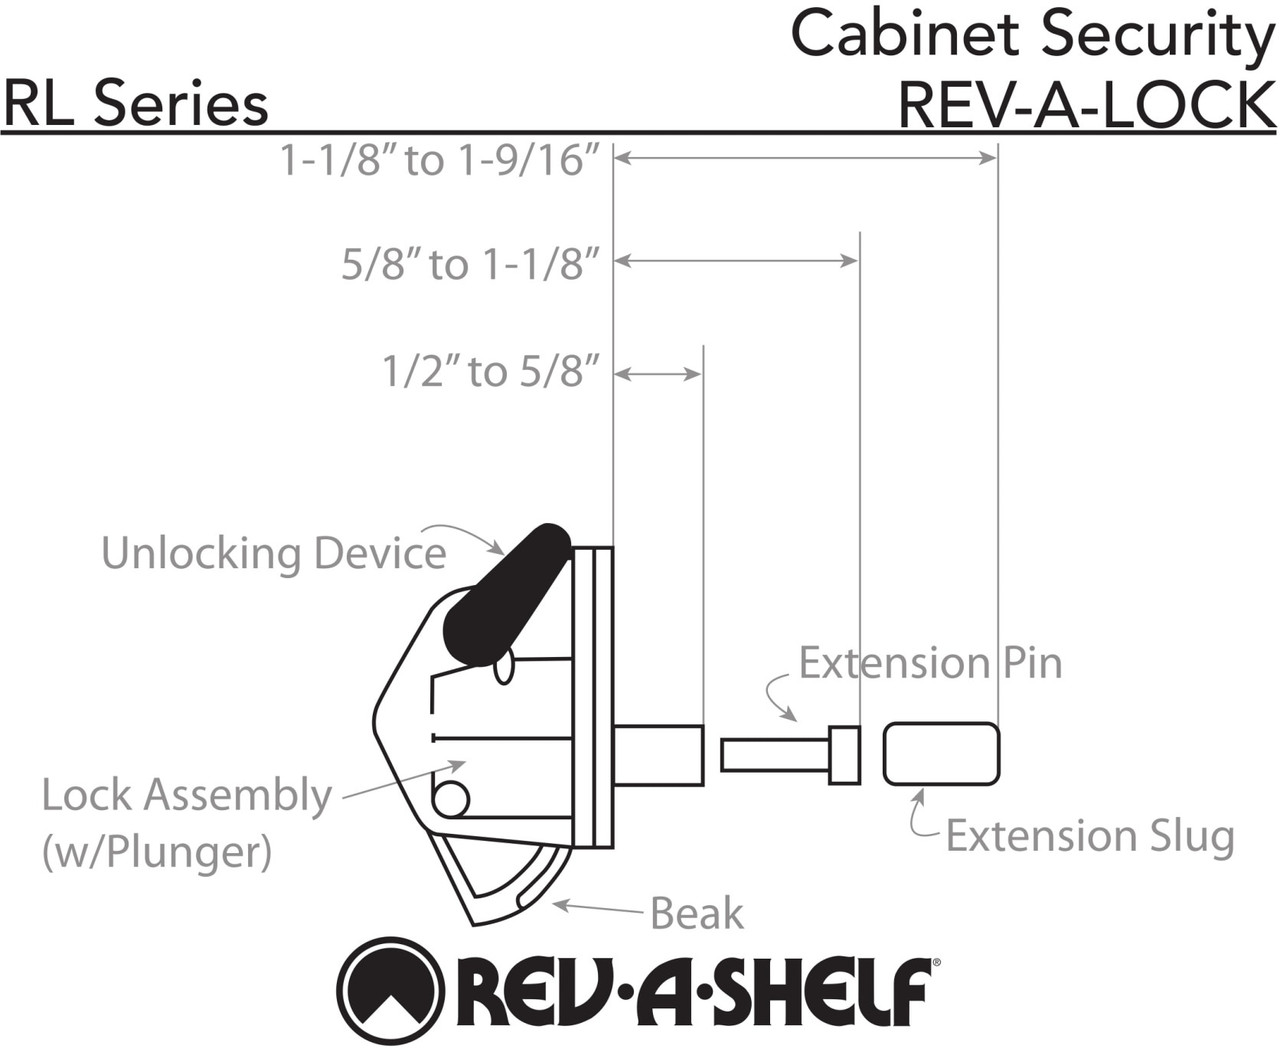 Rev-A-Lock Cabinet Security